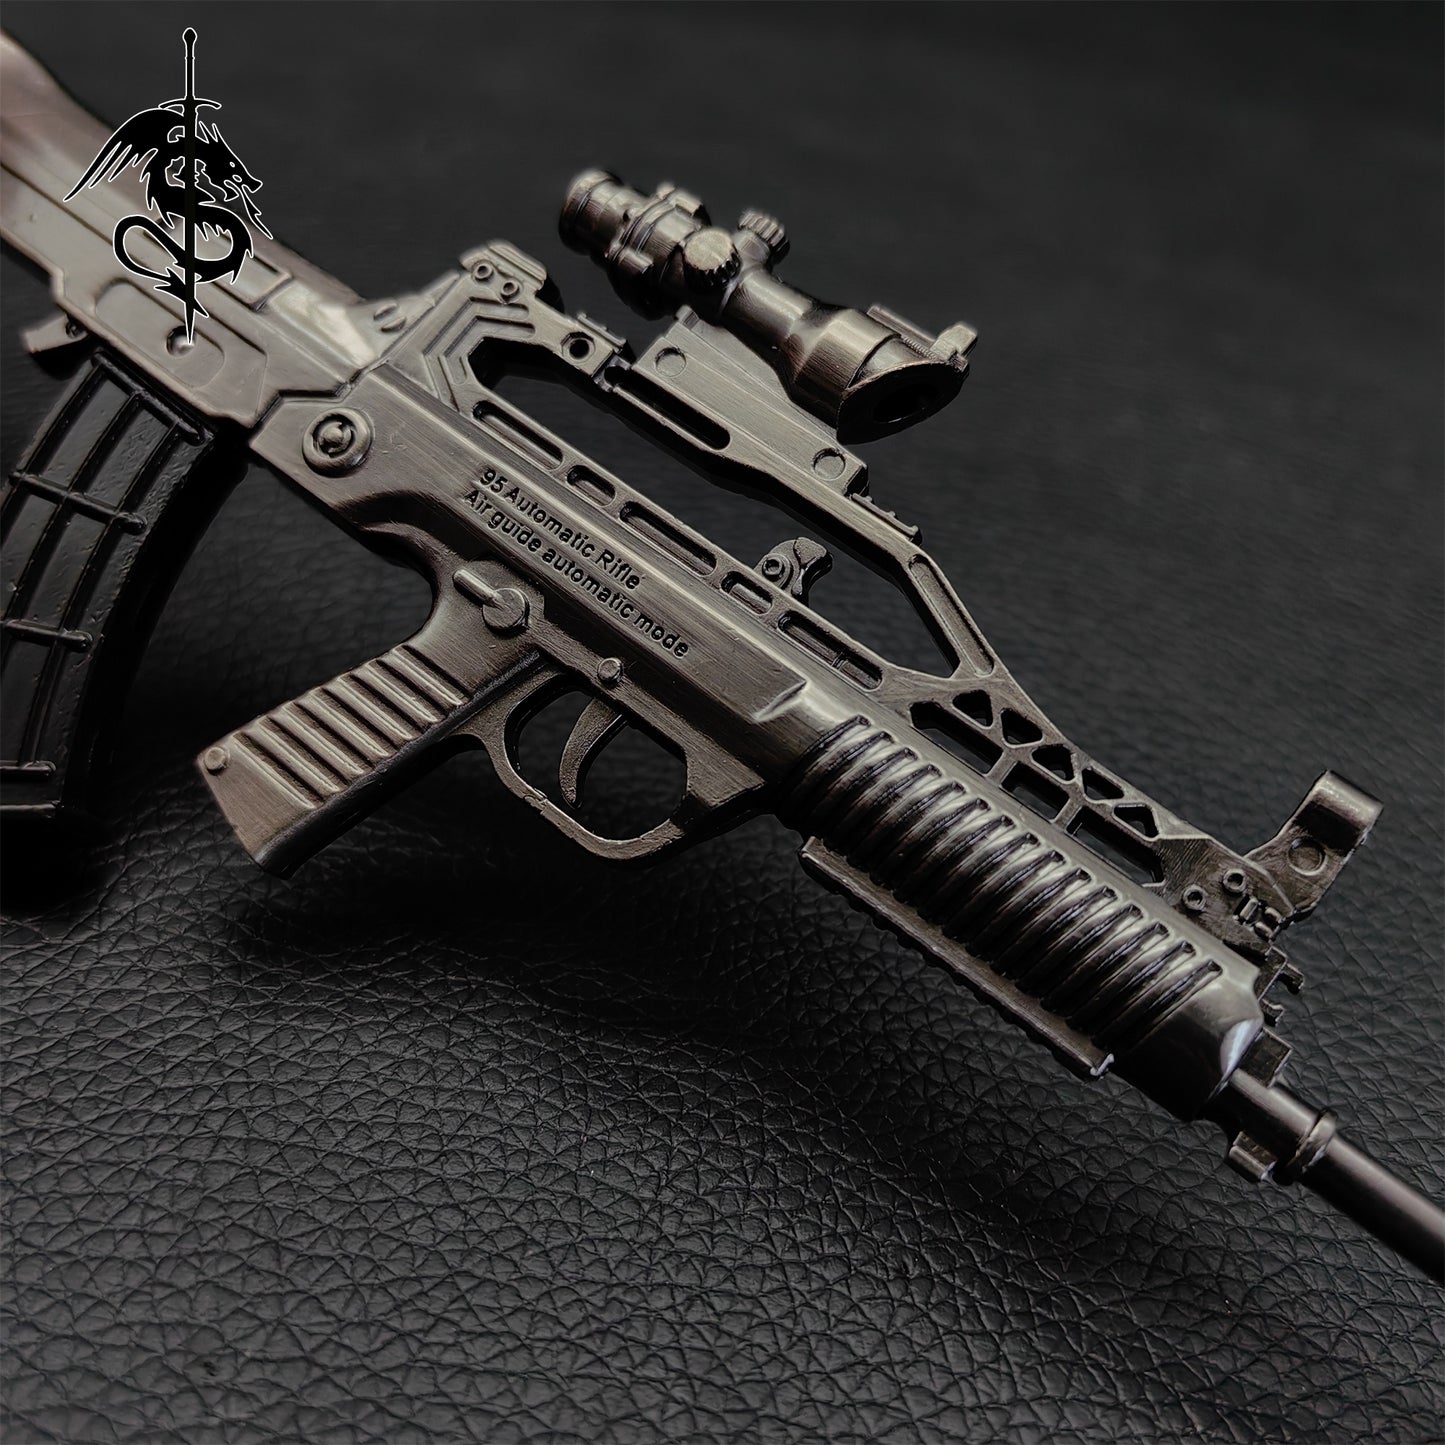 Metal QBZ95 Miniature Gun Chinese Army Standard Assault Rifle